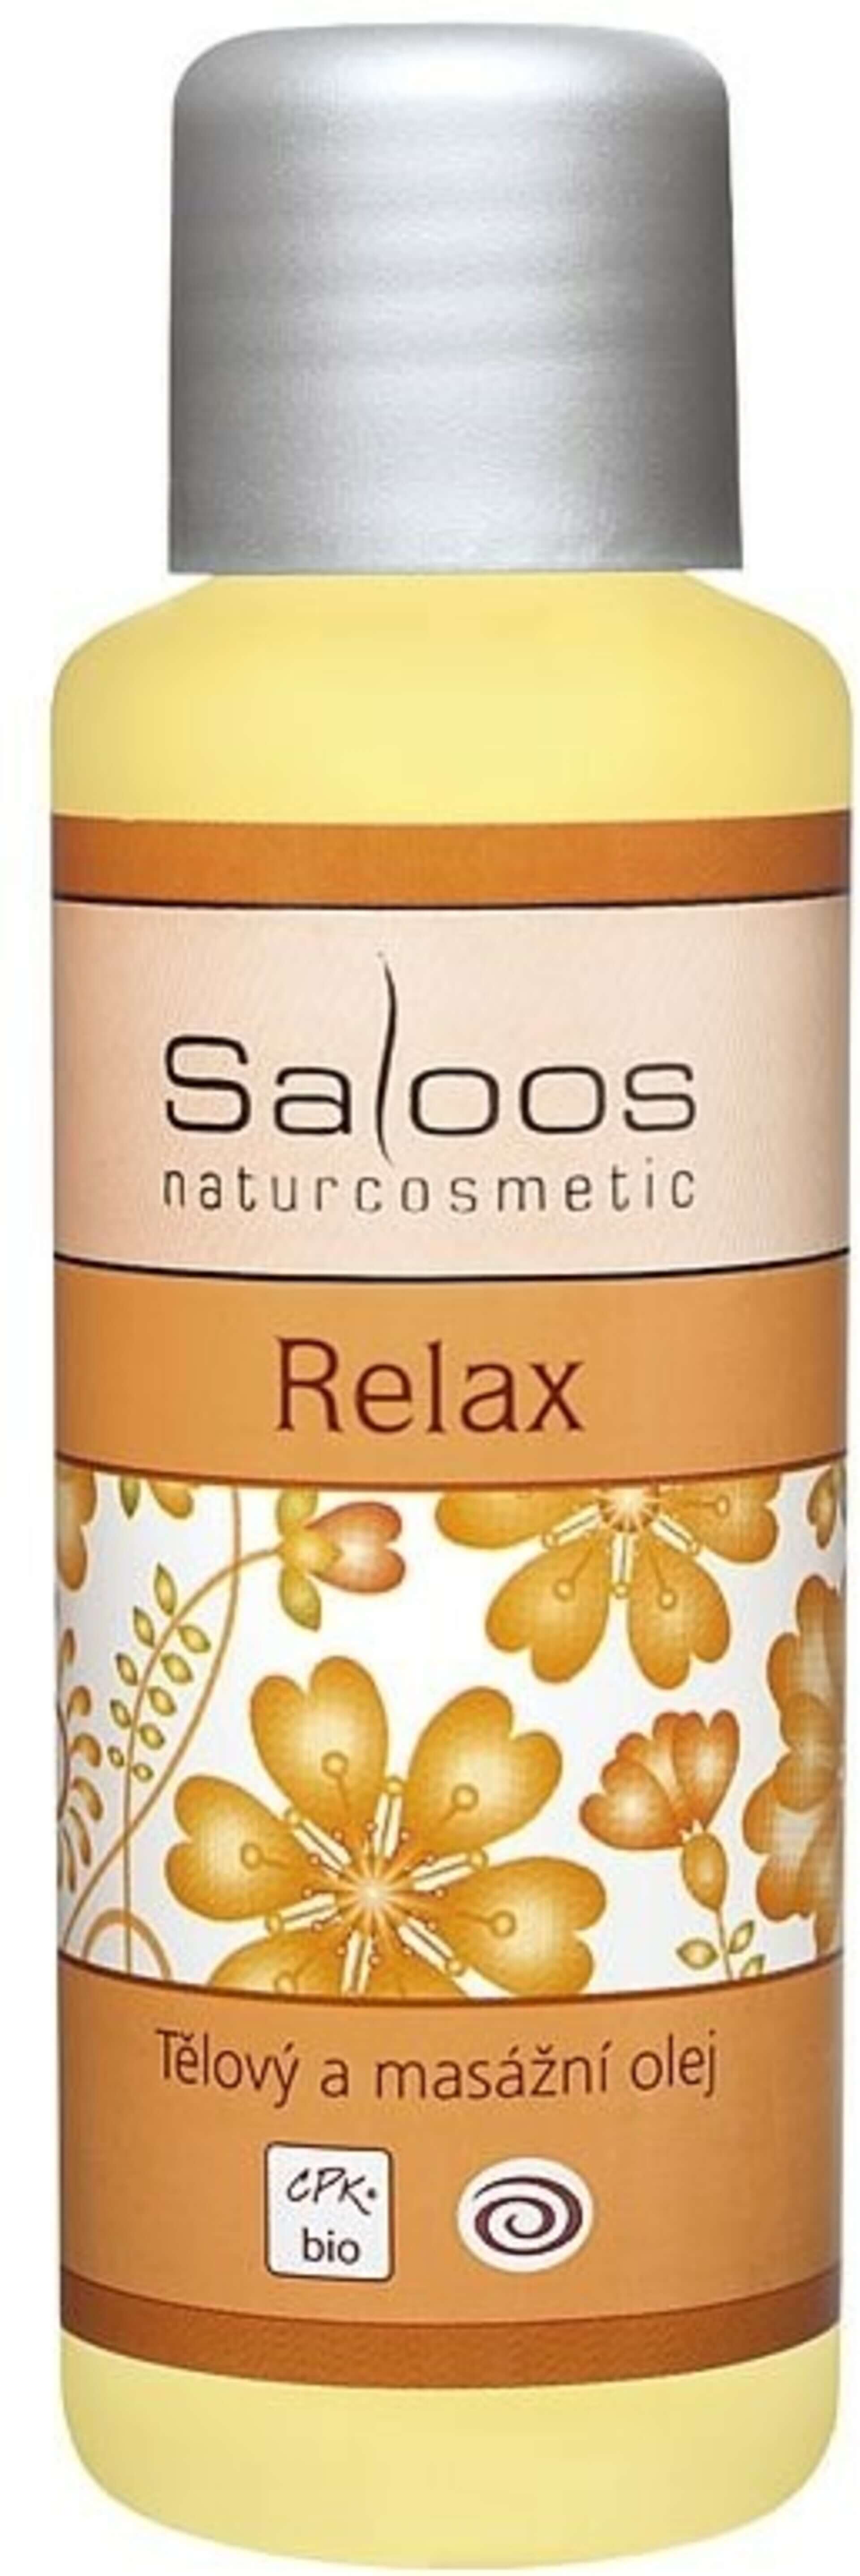 E-shop Saloos olej masážny RELAX - MO 50 mll